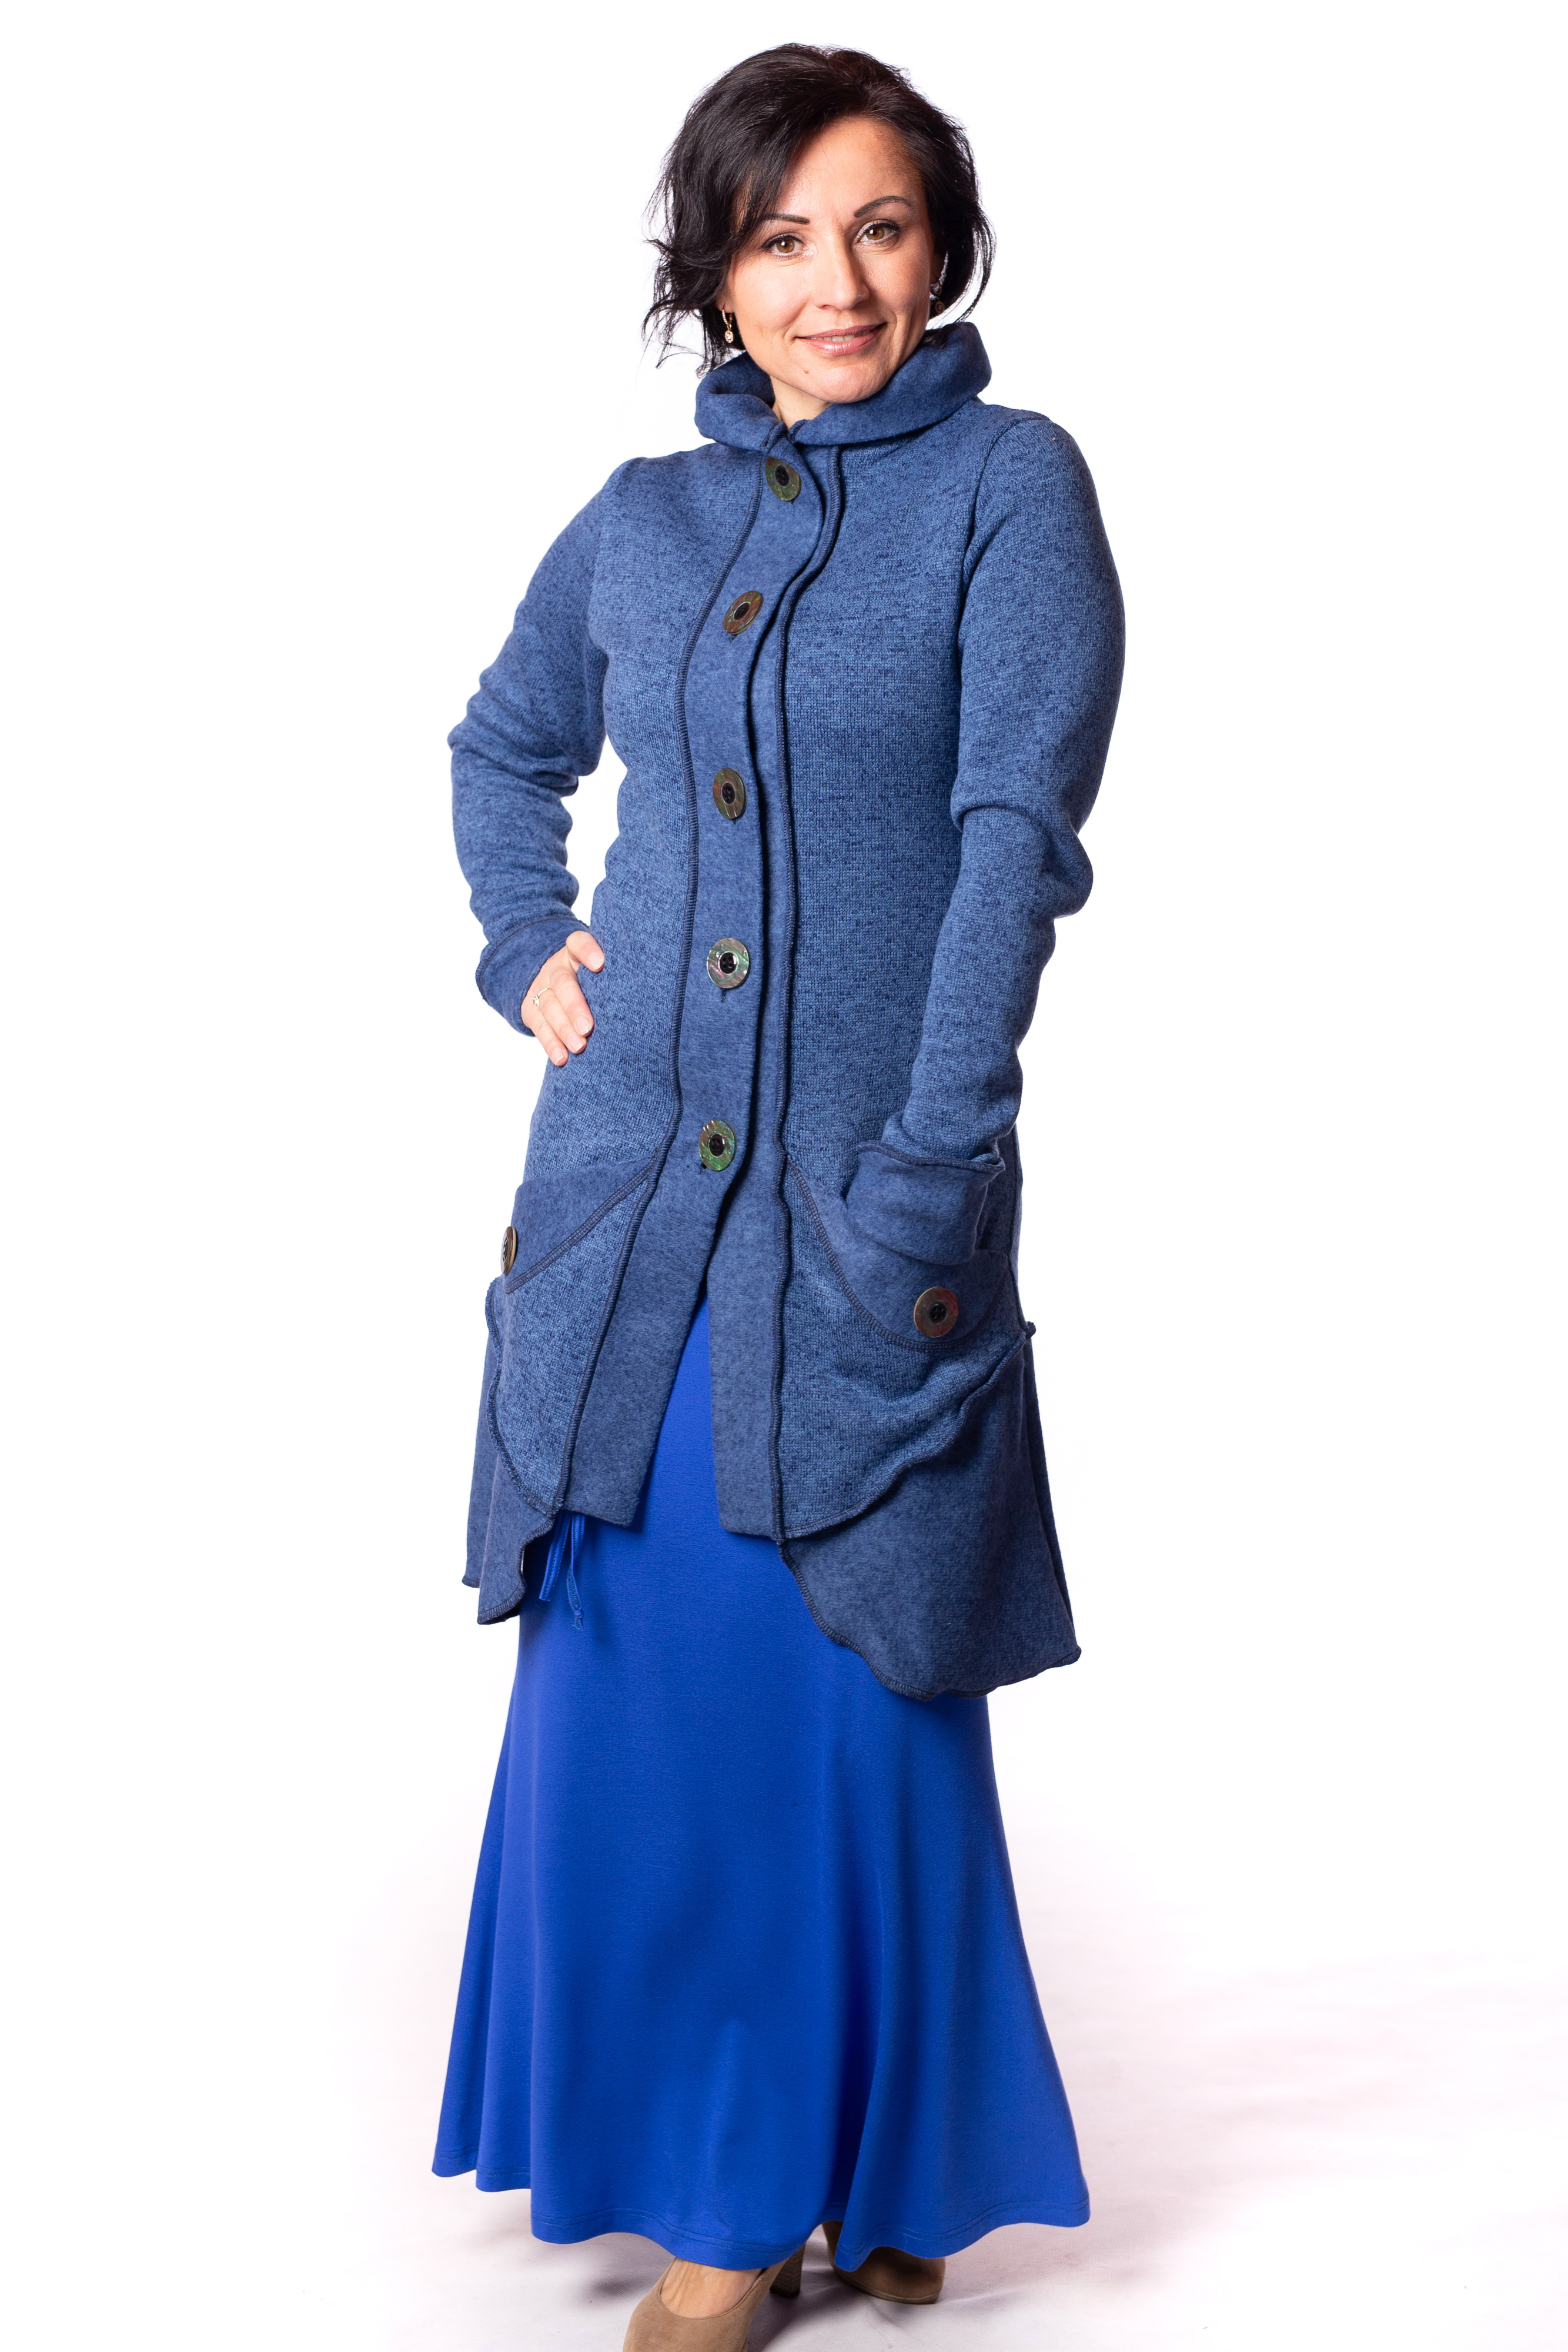 JASNA - svetrový kabátek